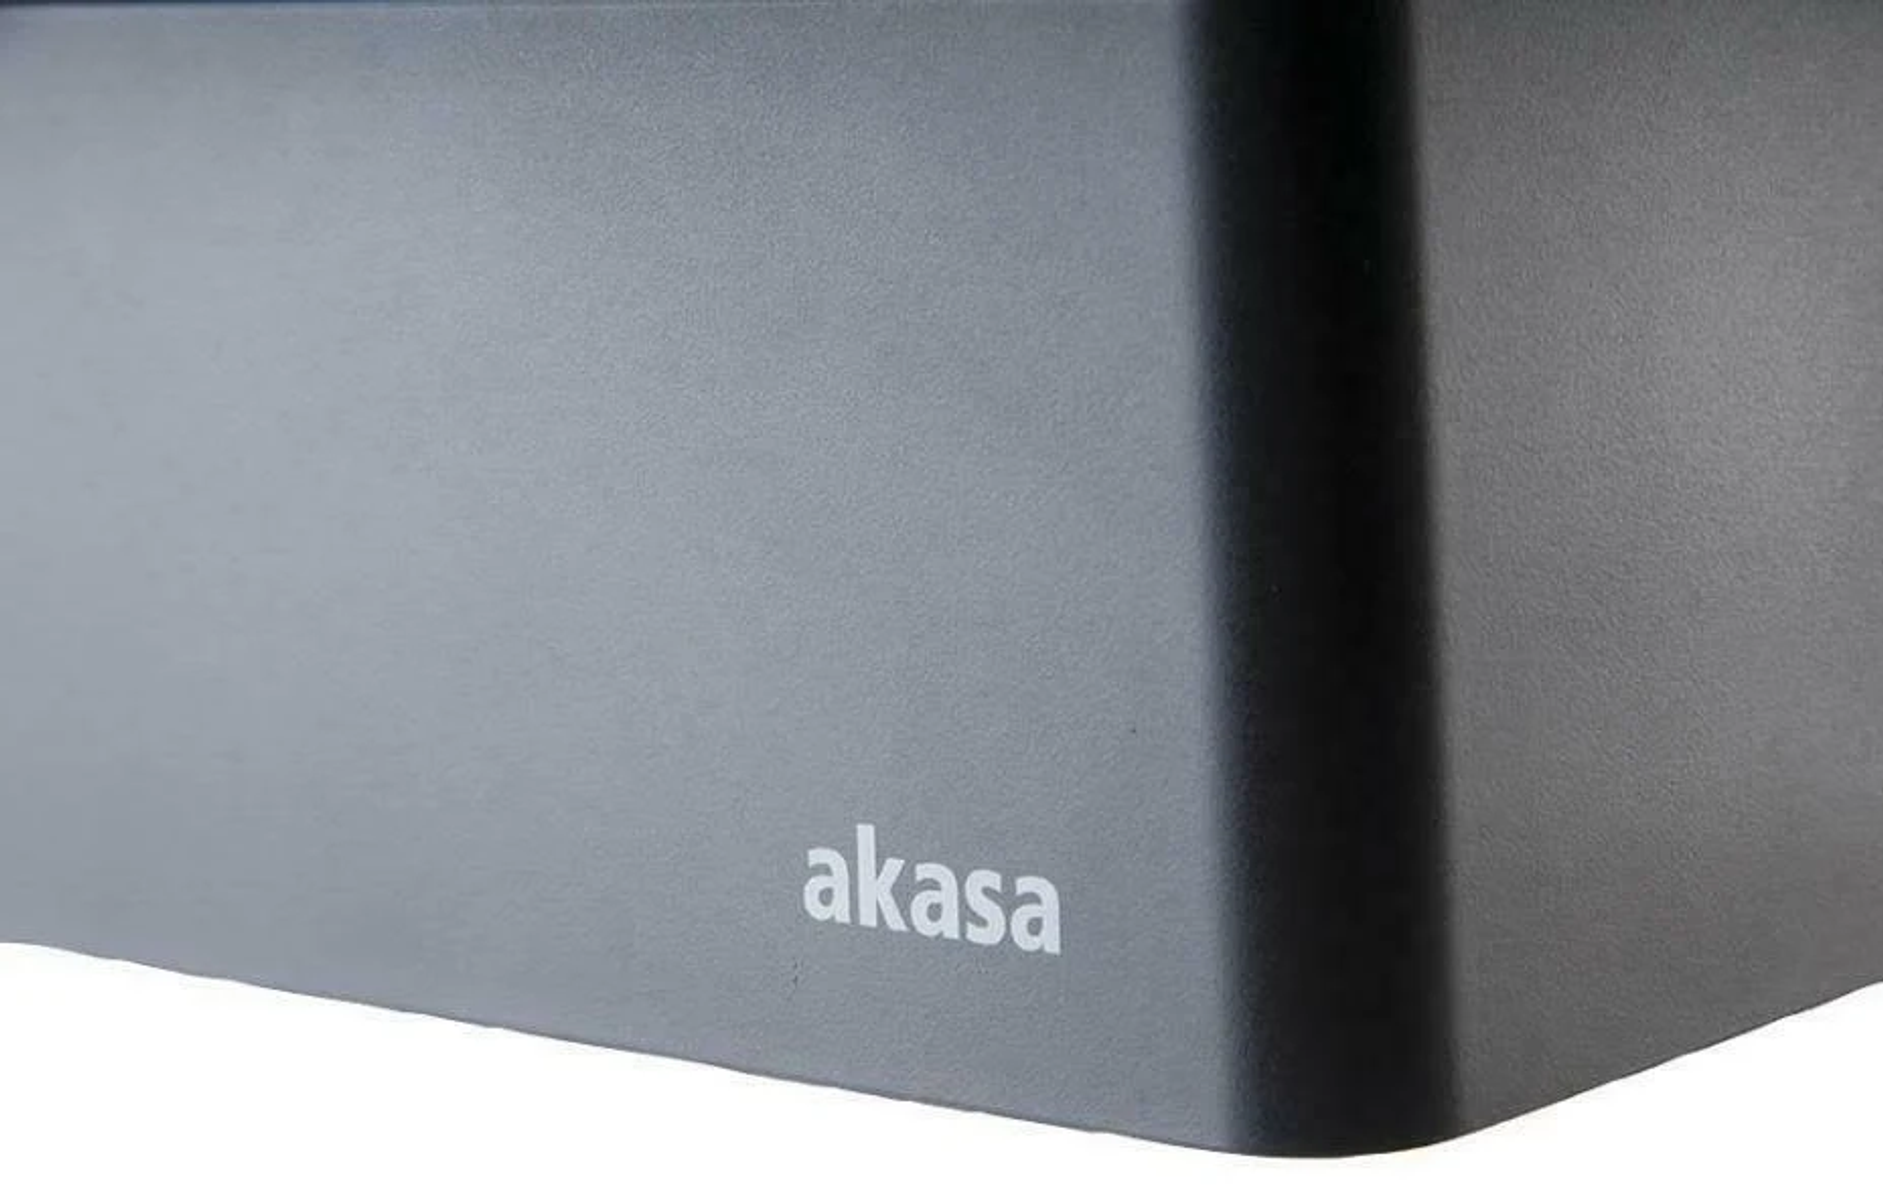 AKASA AK-DK08U3-BKCM Festplatten-Dockingstationen, Weiß